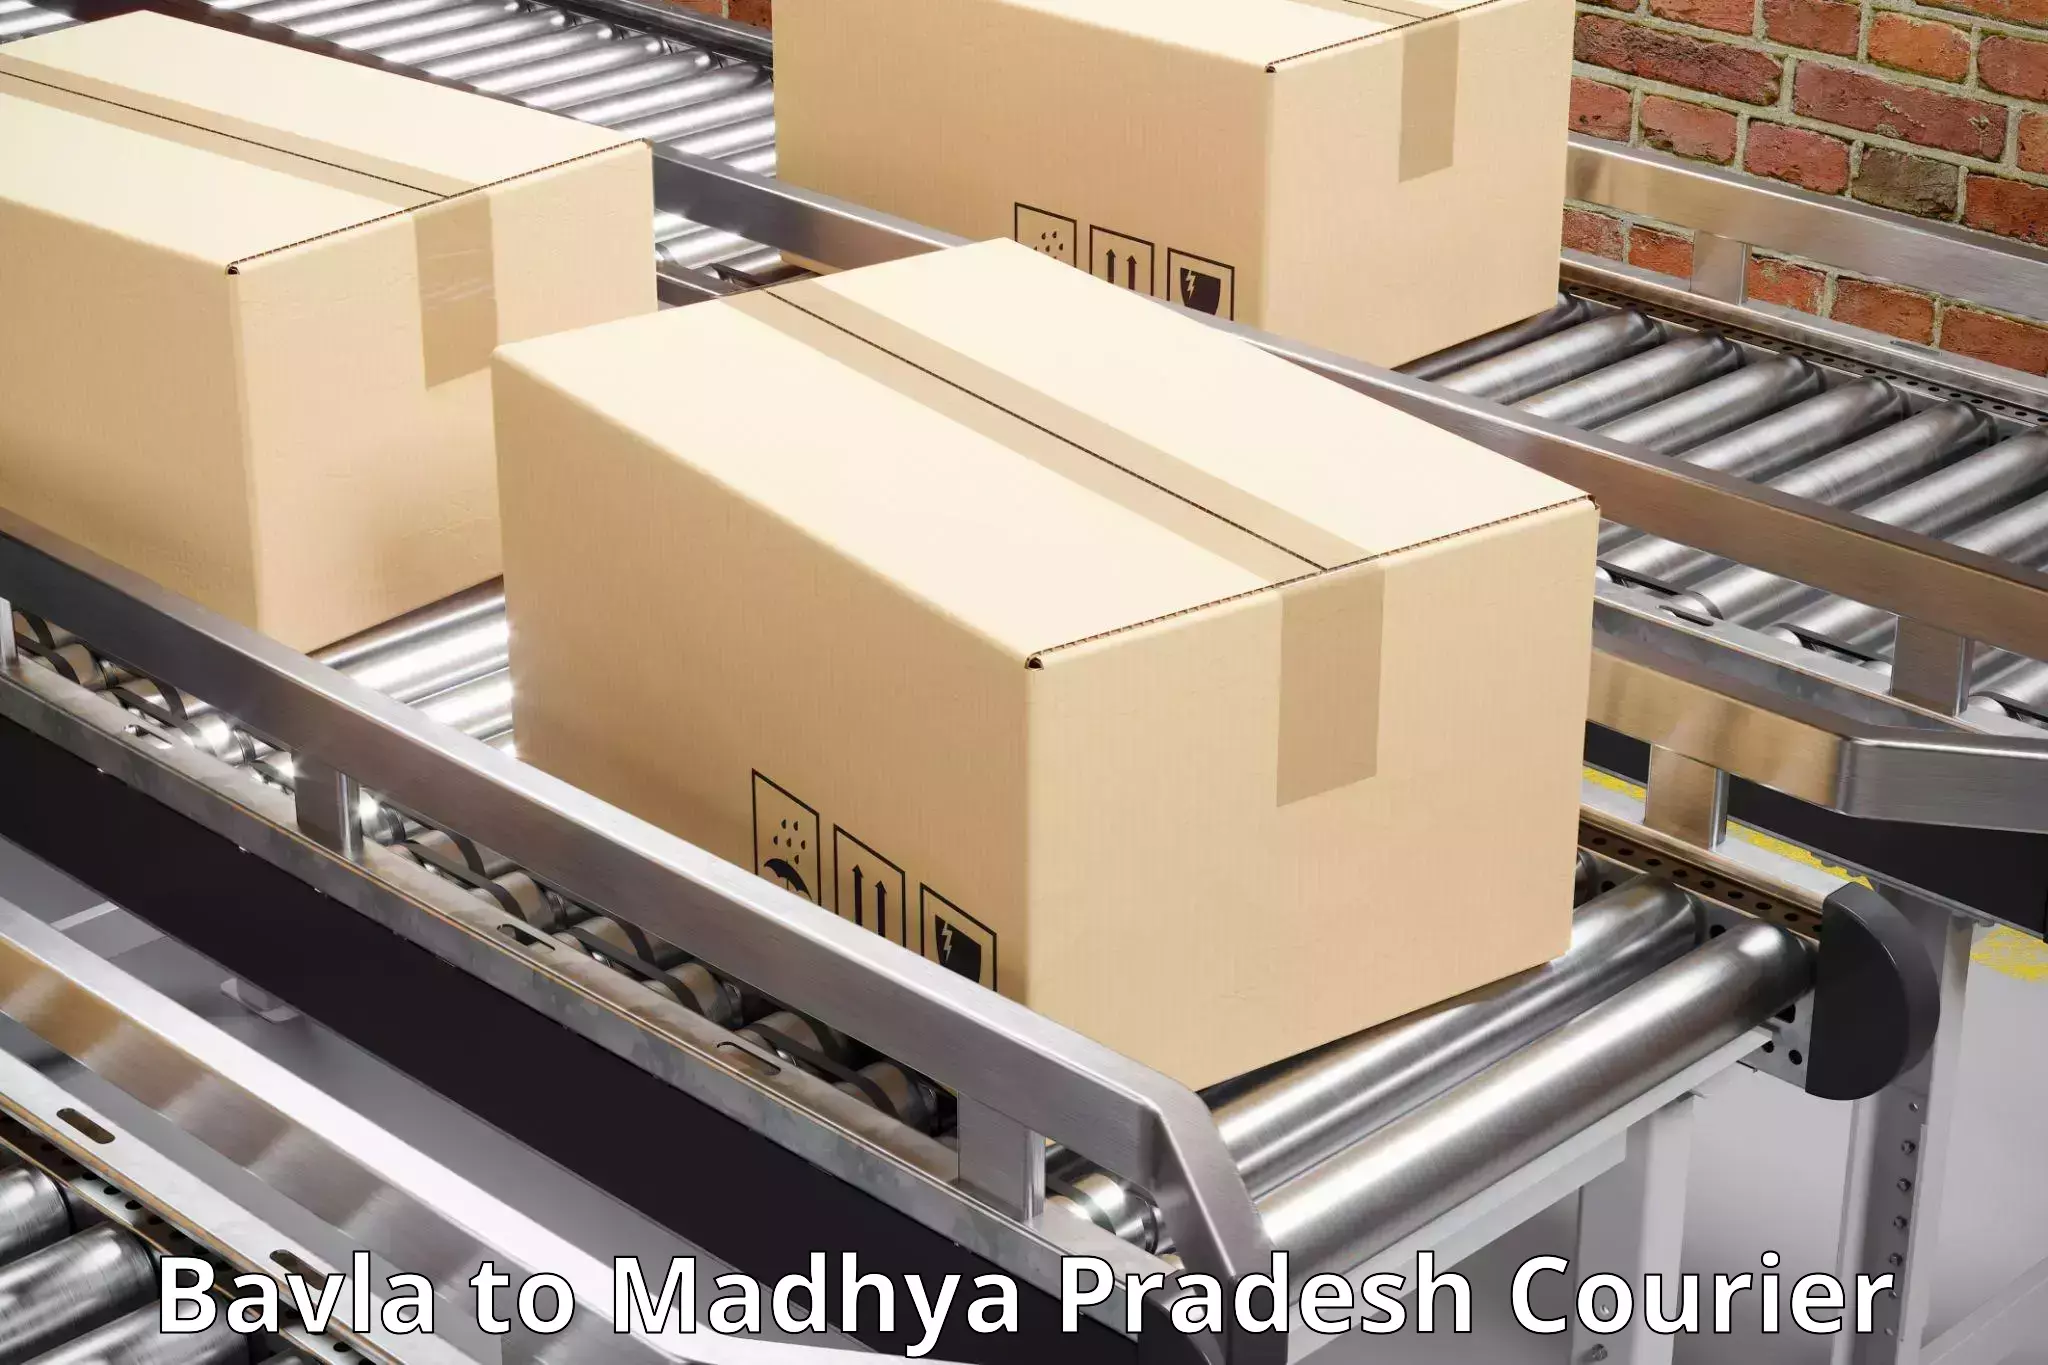 Specialized shipment handling Bavla to Amarkantak